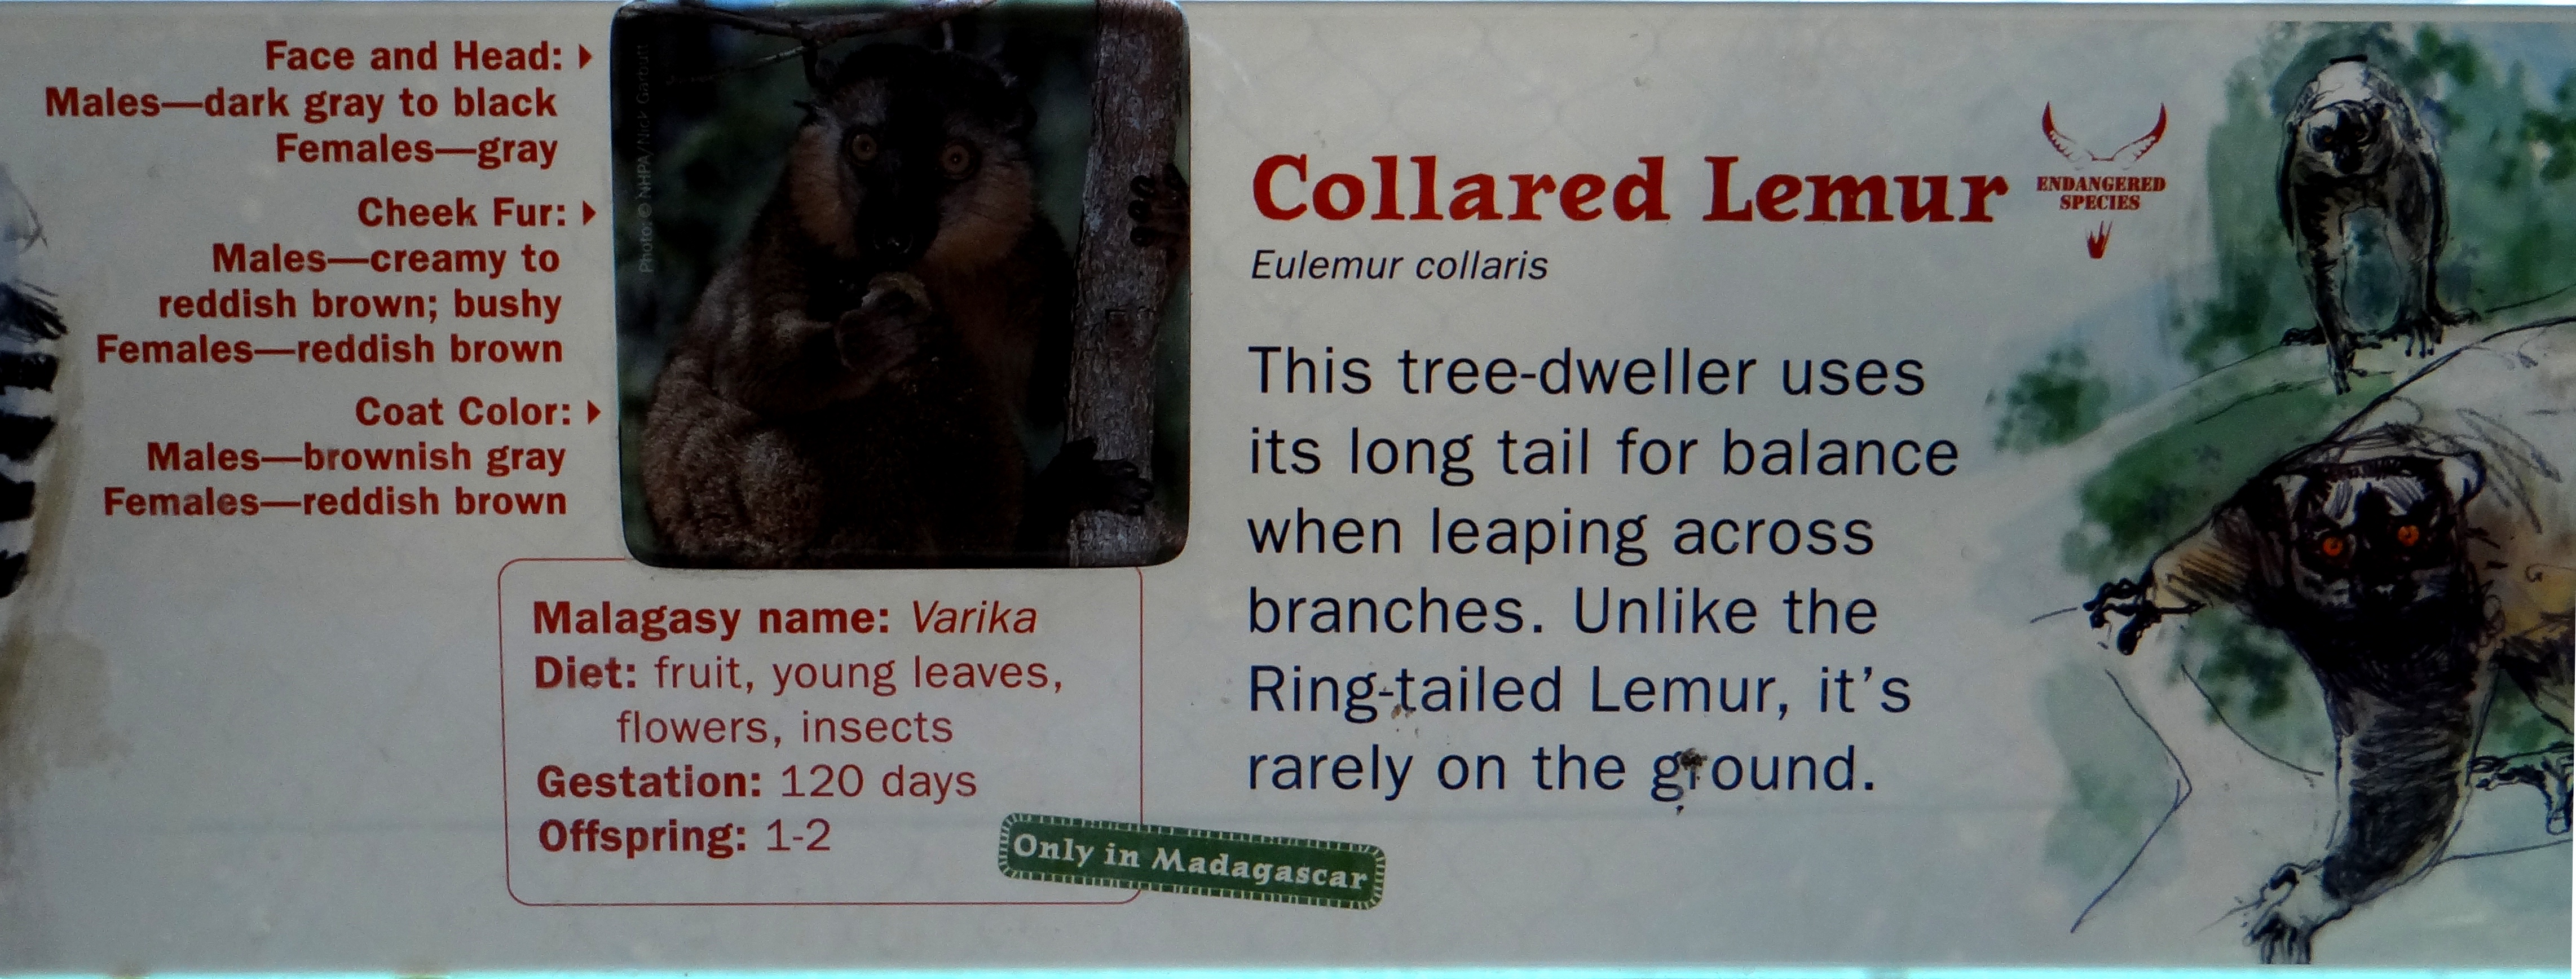 Collared Lemur sign at Bronx Zoo